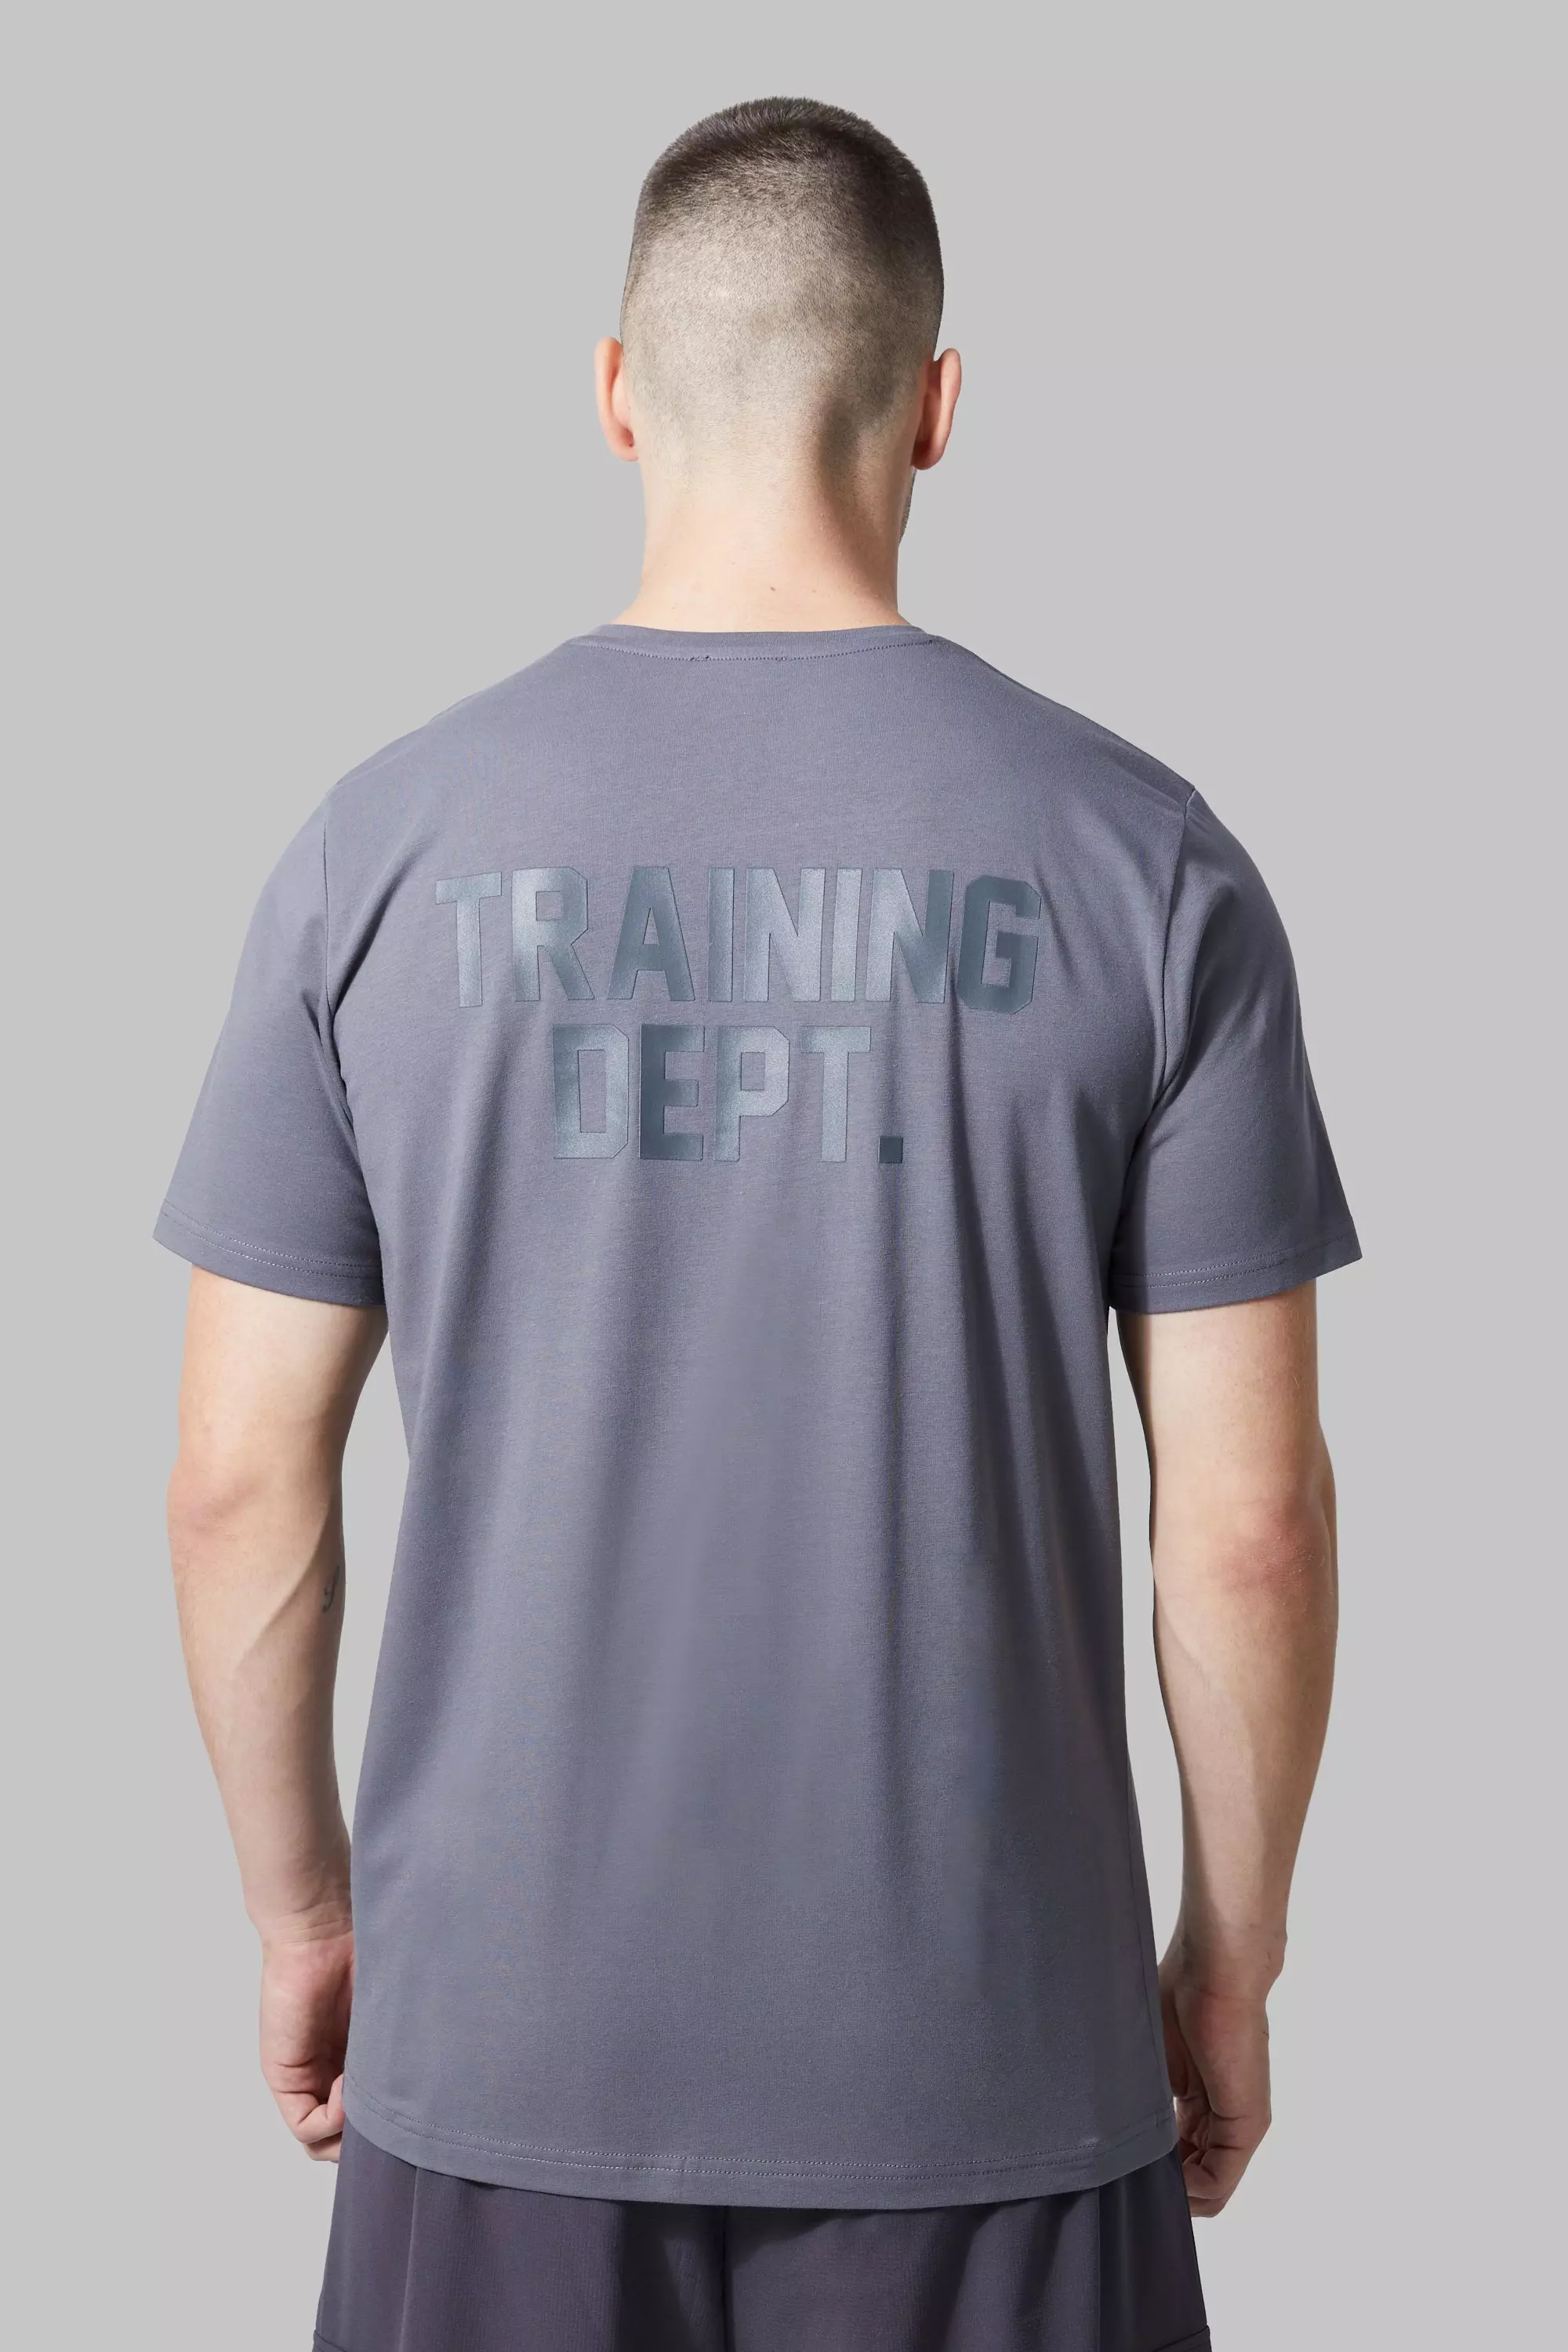 Tall Active Training Dept Performance Slim T-shirt Charcoal